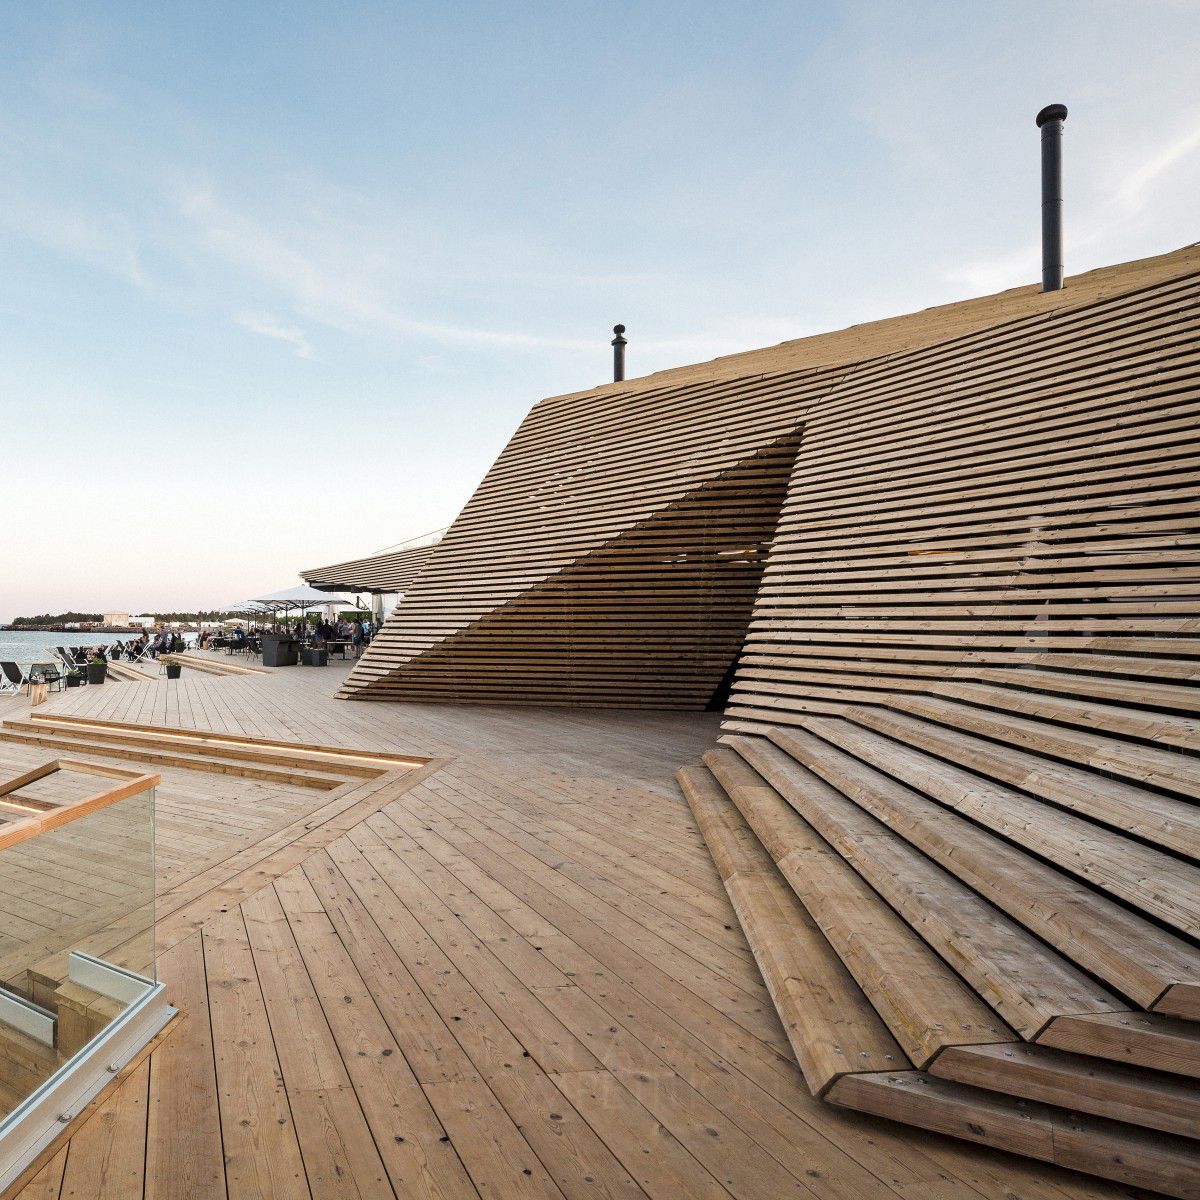 Loyly public sauna and restaurant by Avanto Architects Ltd Team